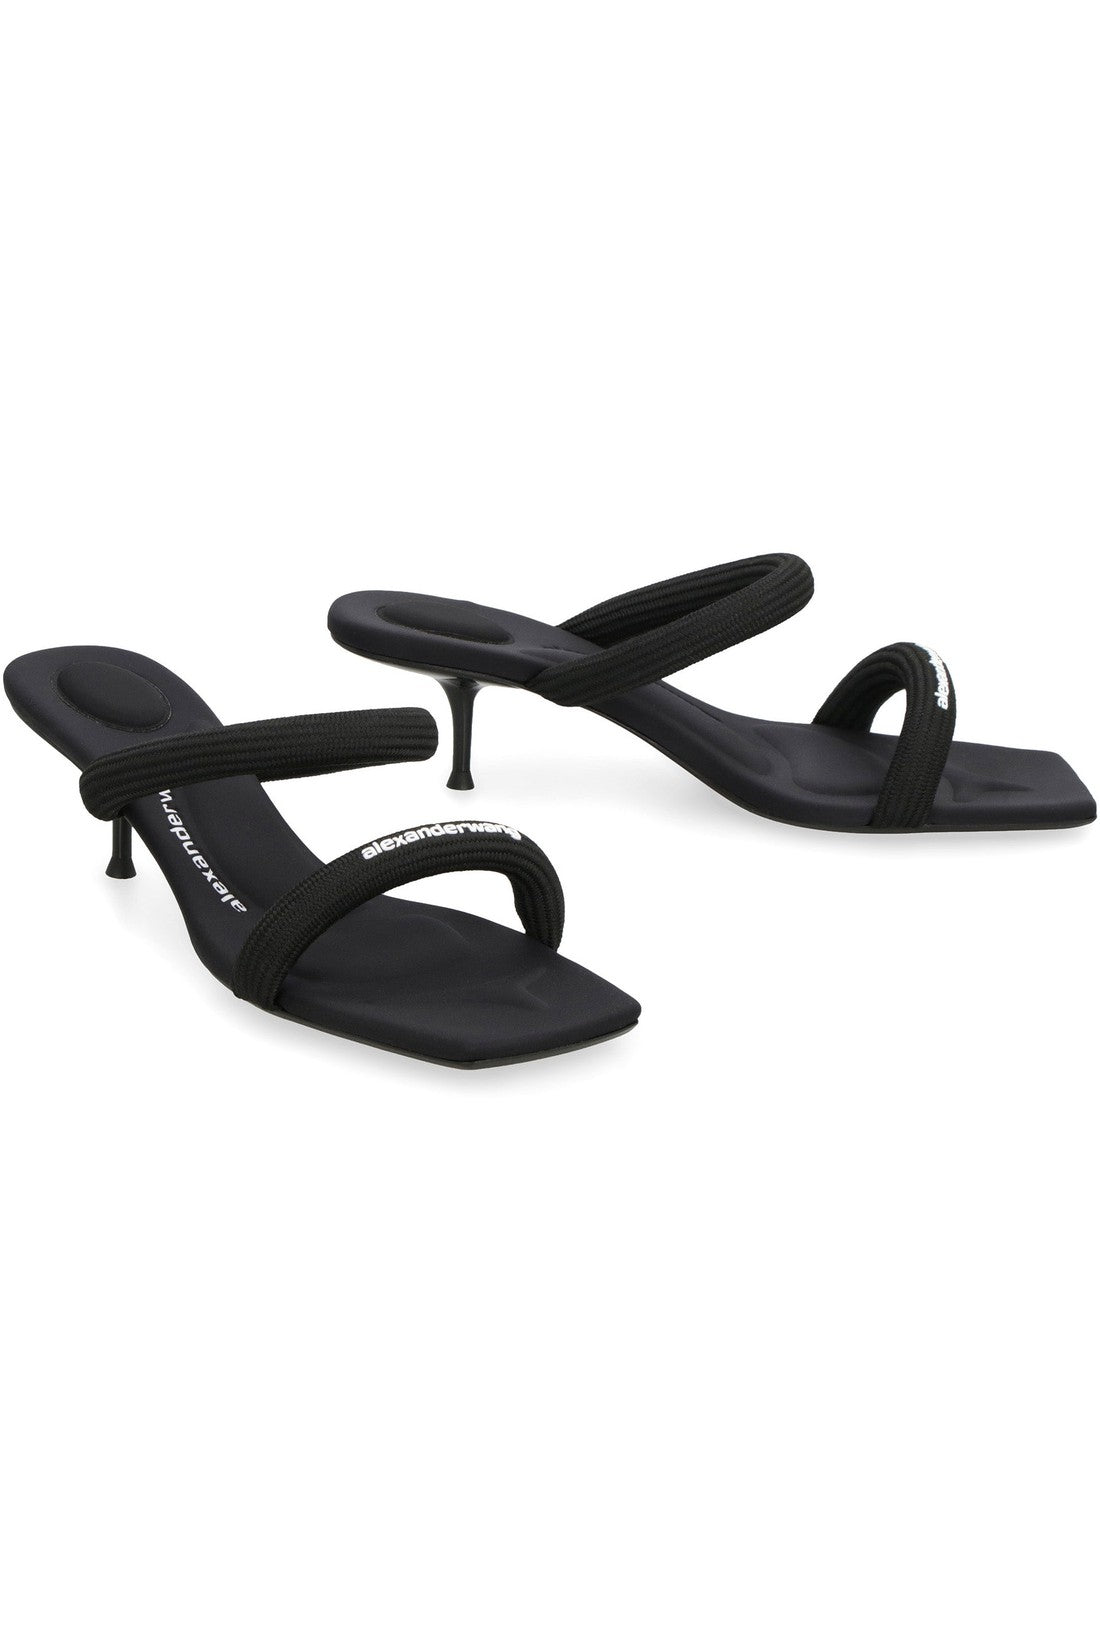 Alexander Wang-OUTLET-SALE-Jessie heeled sandals-ARCHIVIST